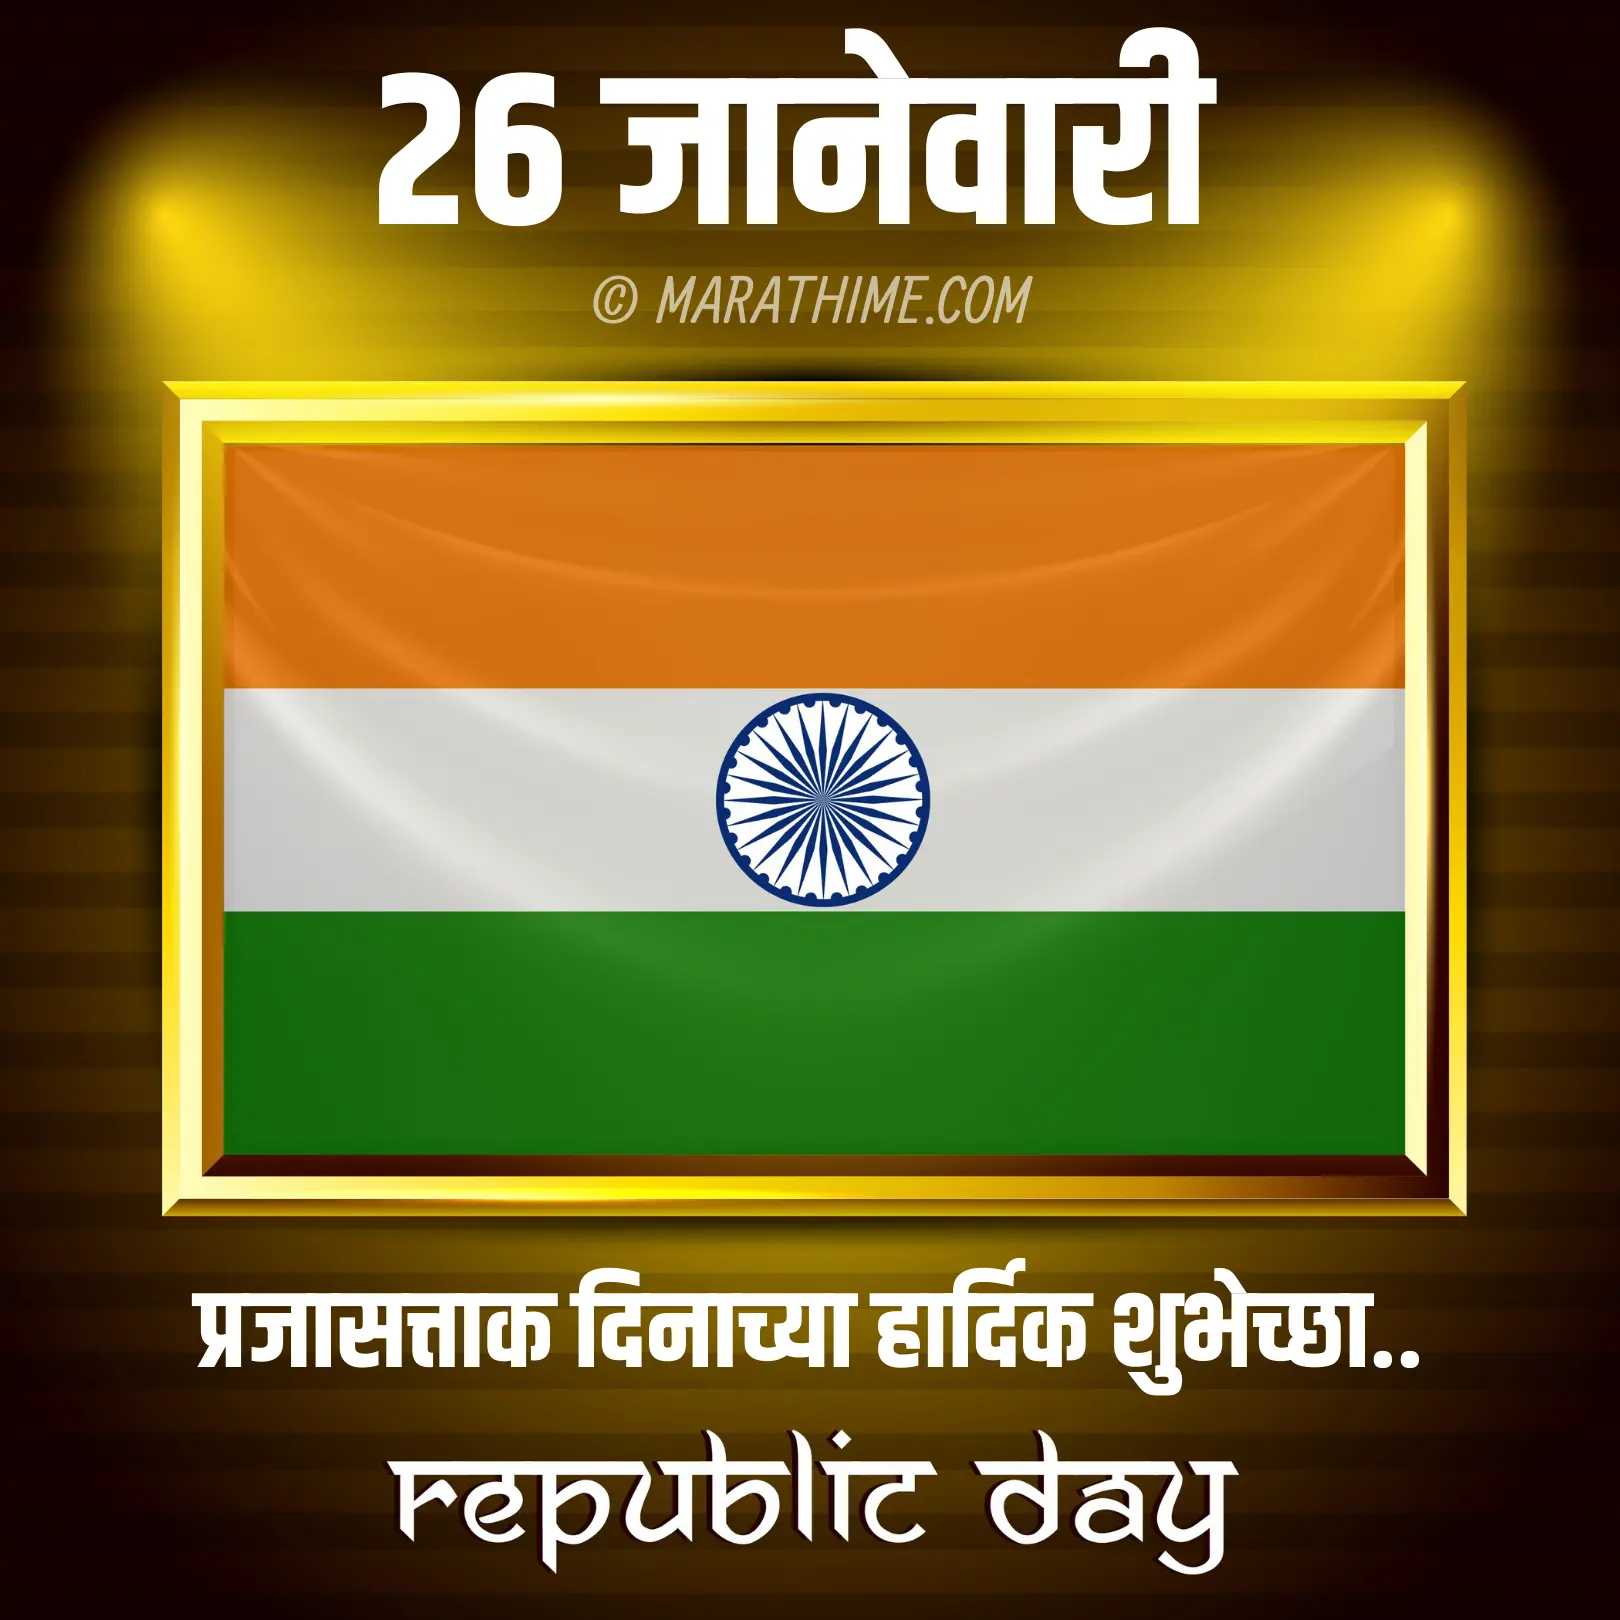 प्रजासत्ताक दिन शुभेच्छा-republic day quotes in marathi (19)